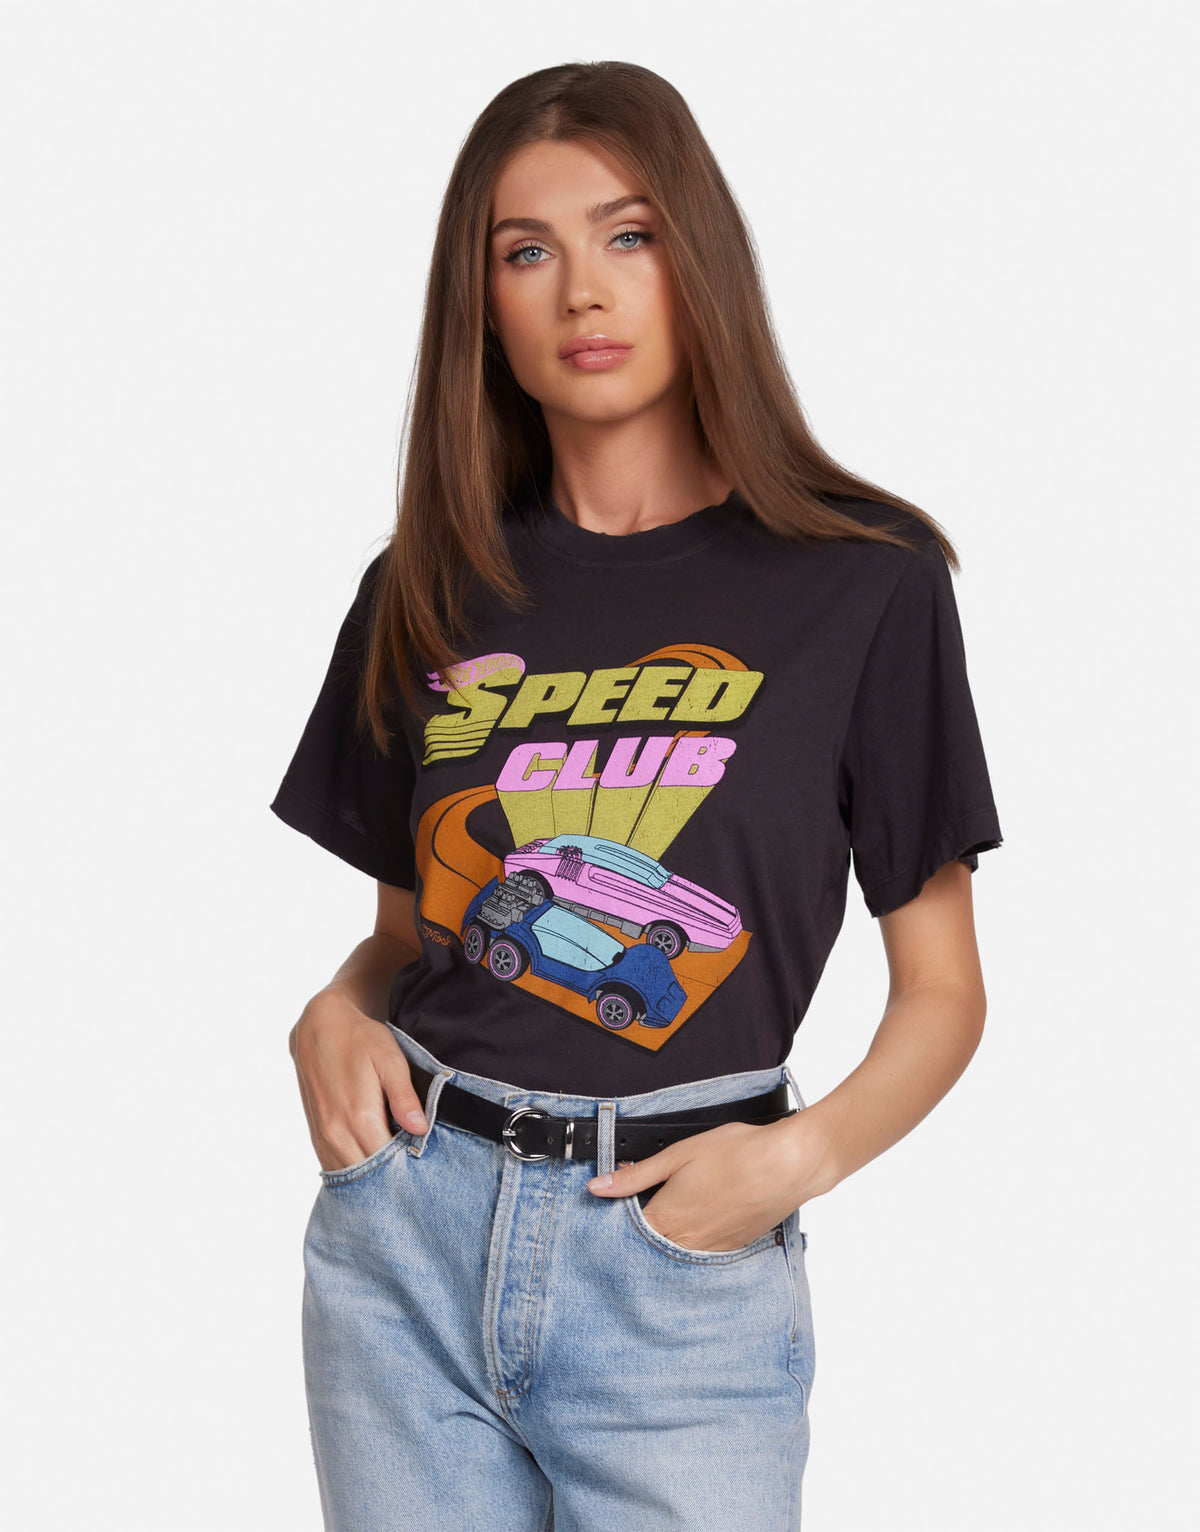 Rue Hot Wheels™ Speed Club